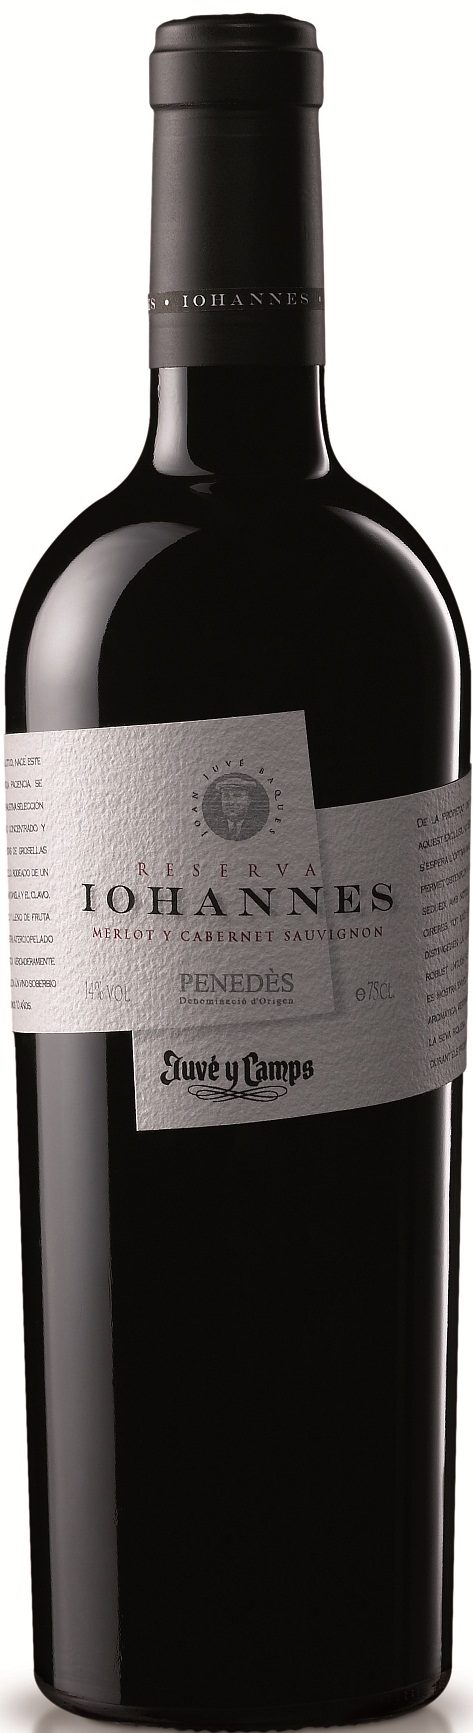 Image of Wine bottle Iohannes